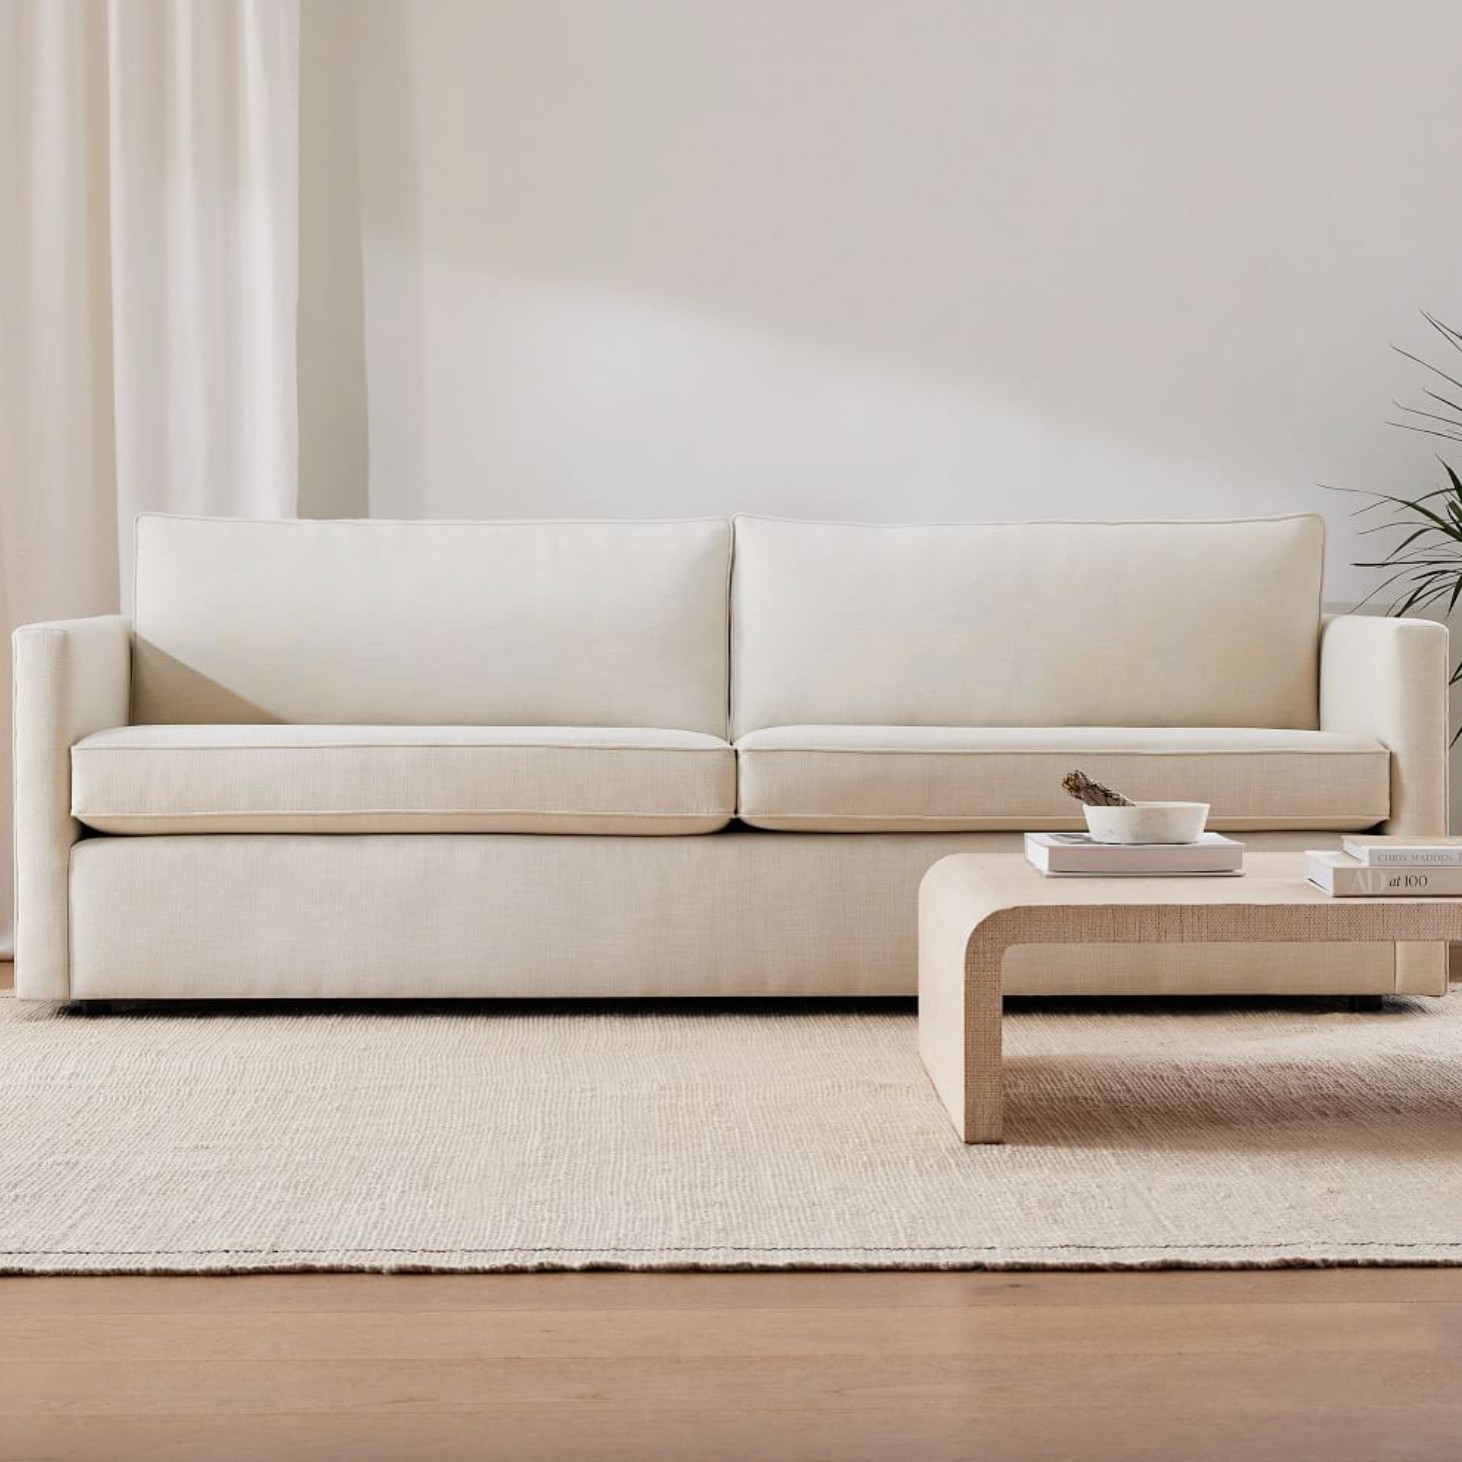 Our Honest West Elm Furniture Reviews: What We'd Buy Again - VIV & TIM